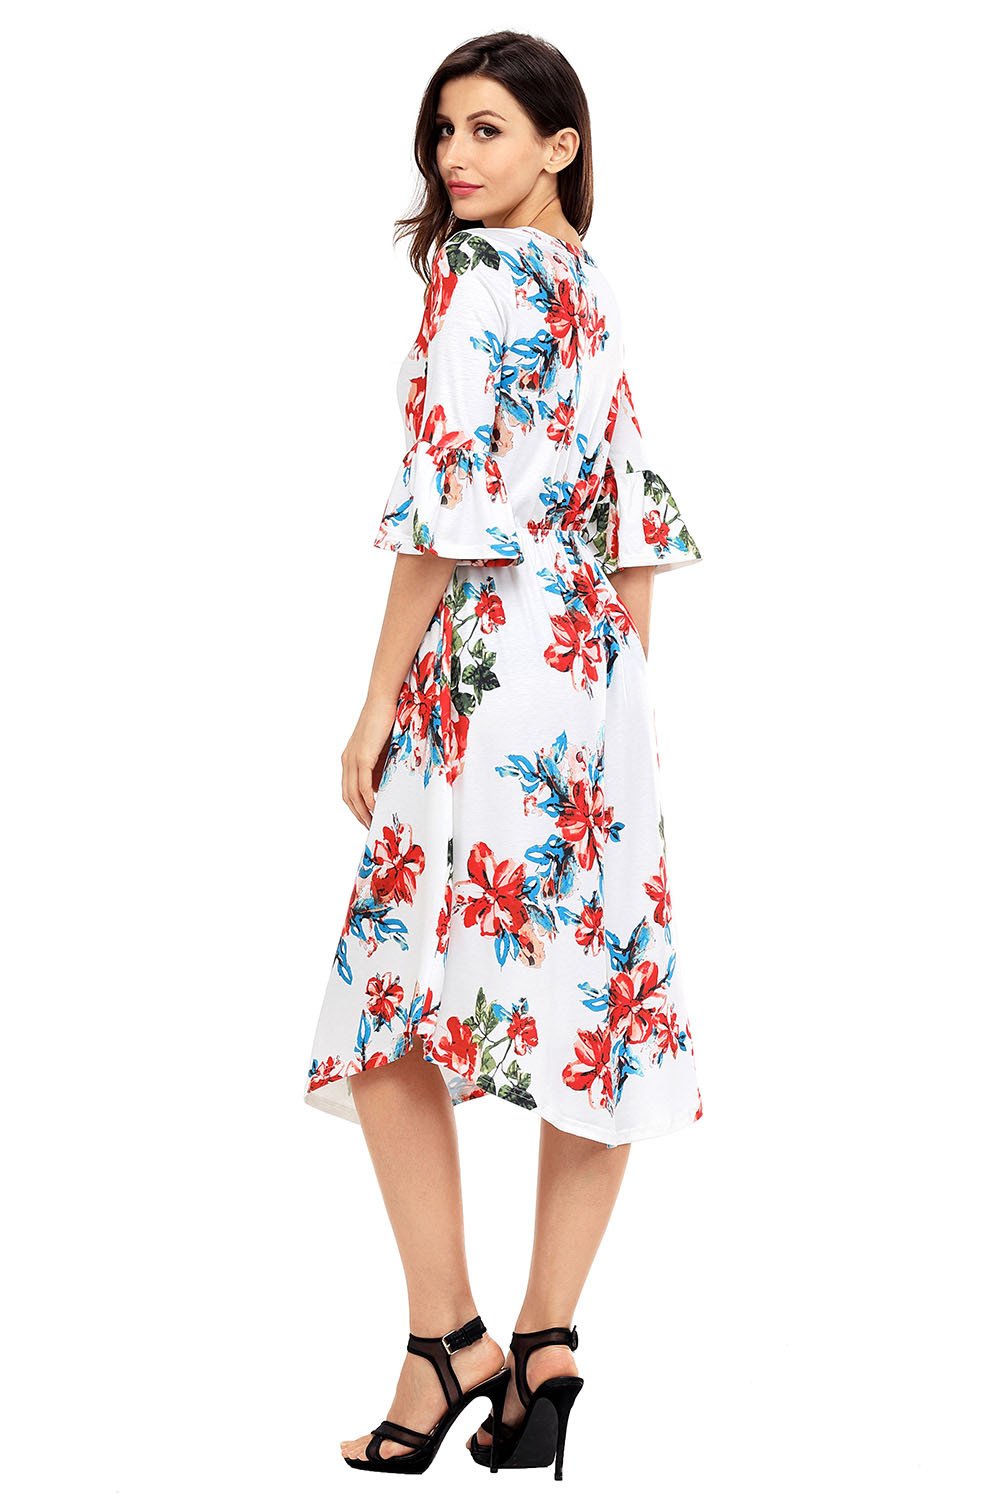 Find Me Floral Print Bell Sleeve Midi Dress